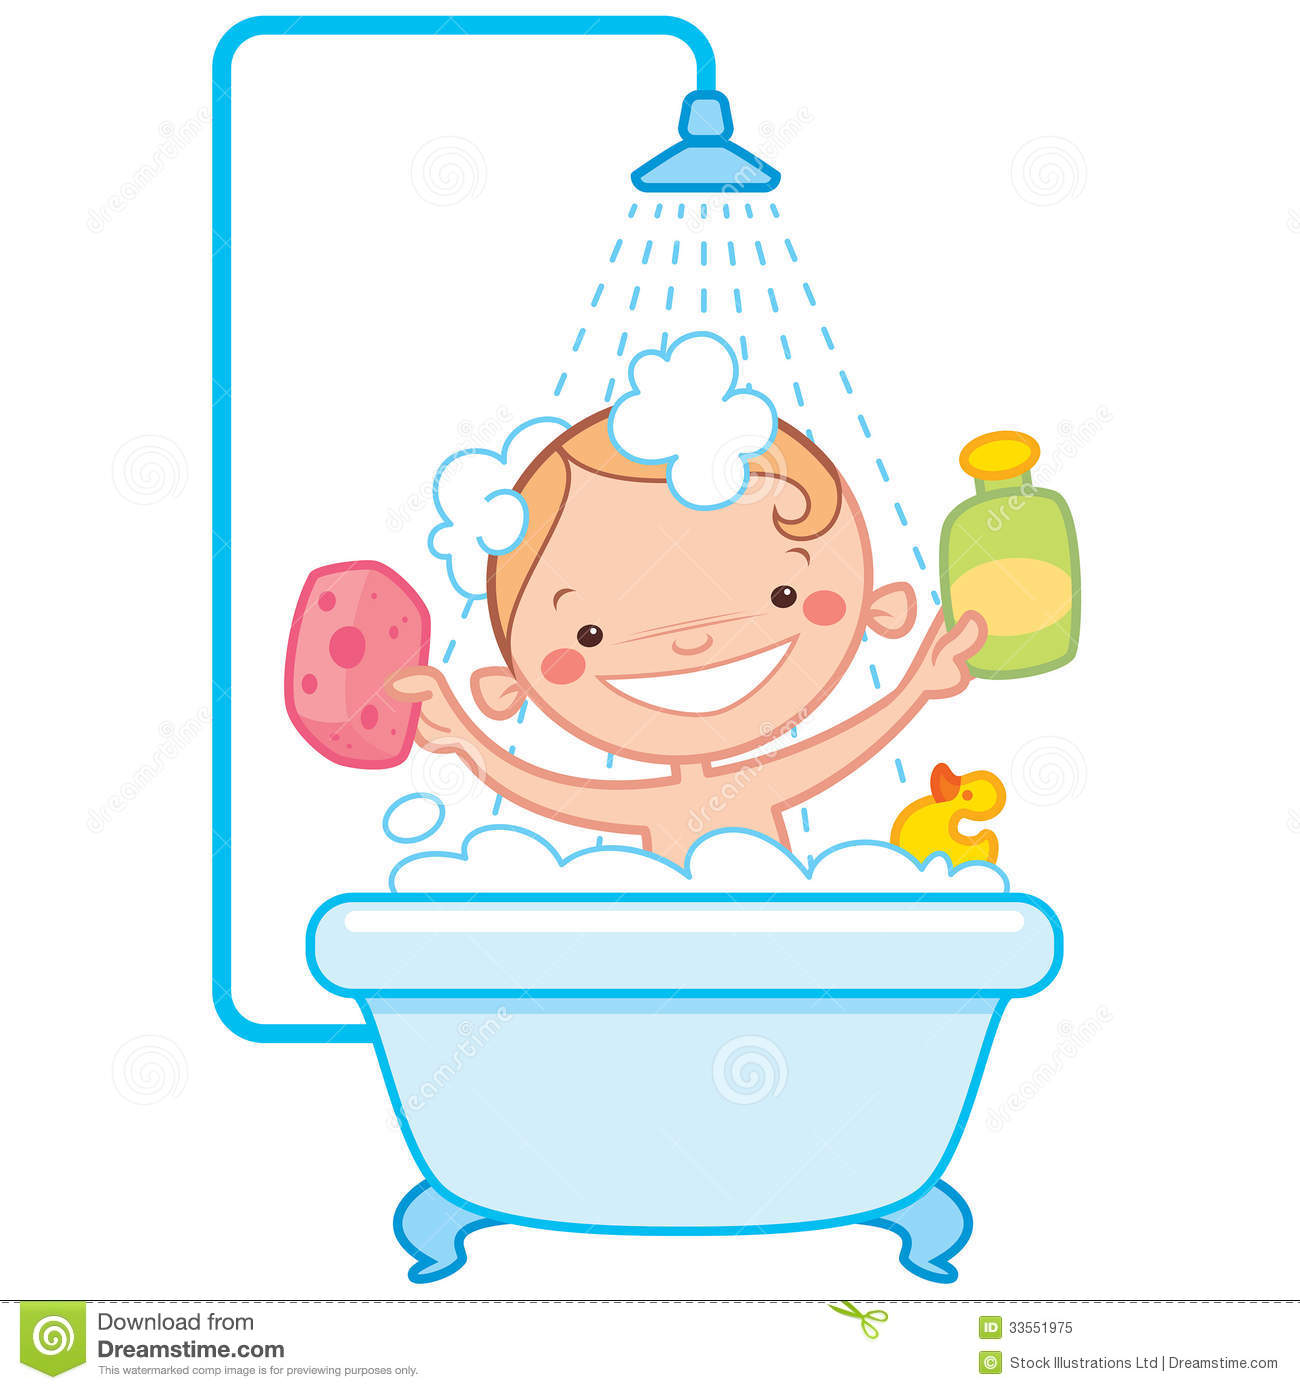 Happy Cartoon Baby Kid In Bath Tub Royalty Free Stock Photo   Image    